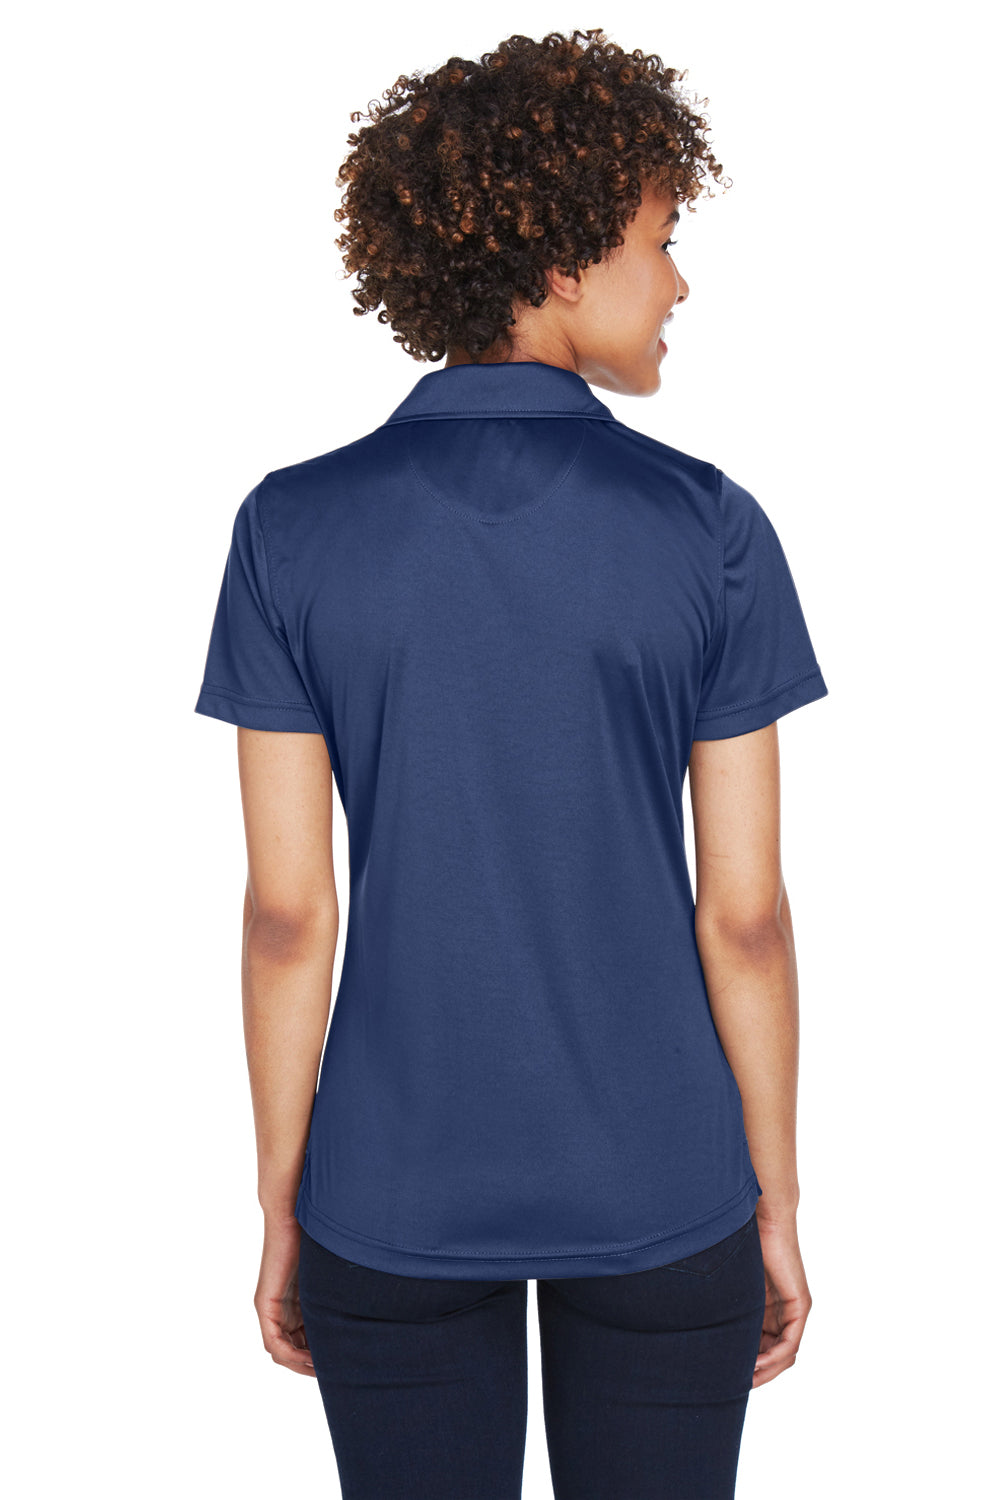 UltraClub 8425L Womens Cool & Dry Performance Moisture Wicking Short Sleeve Polo Shirt Navy Blue Back